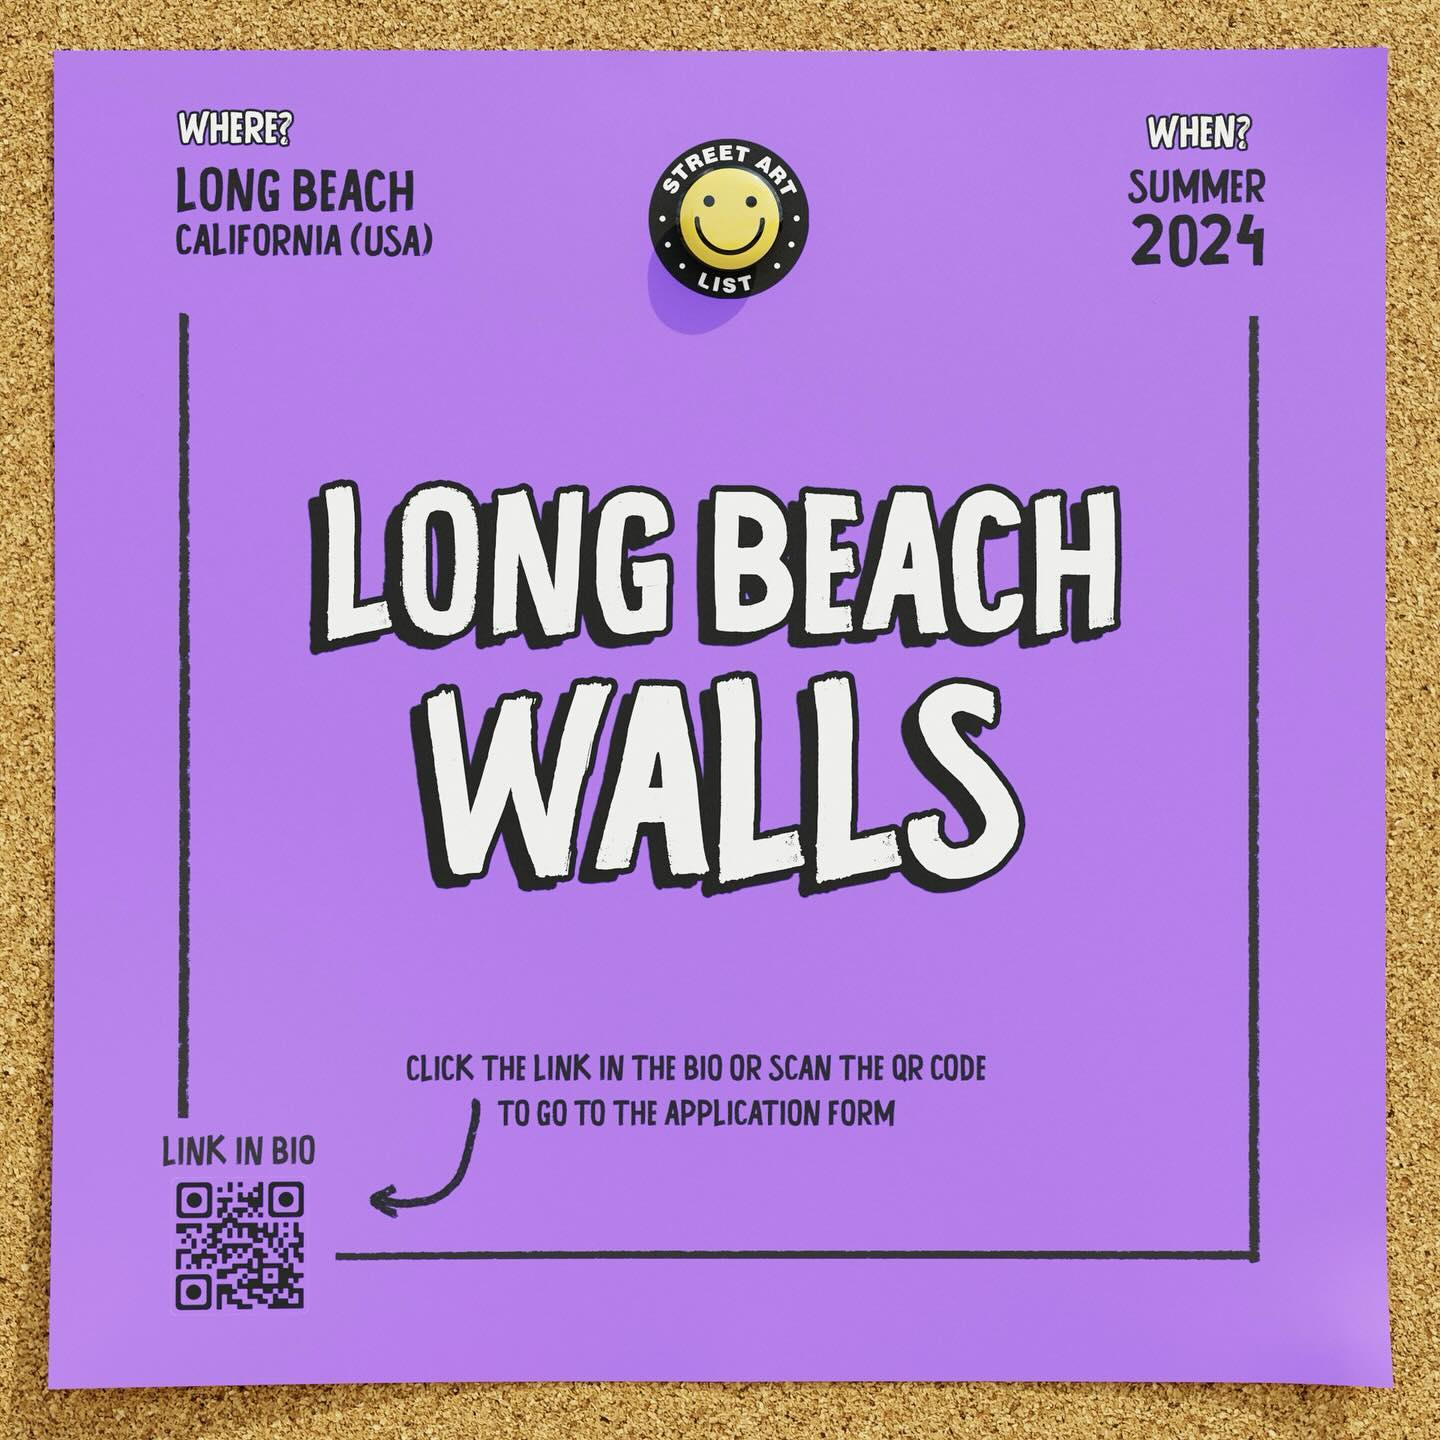 Long Beach Walls